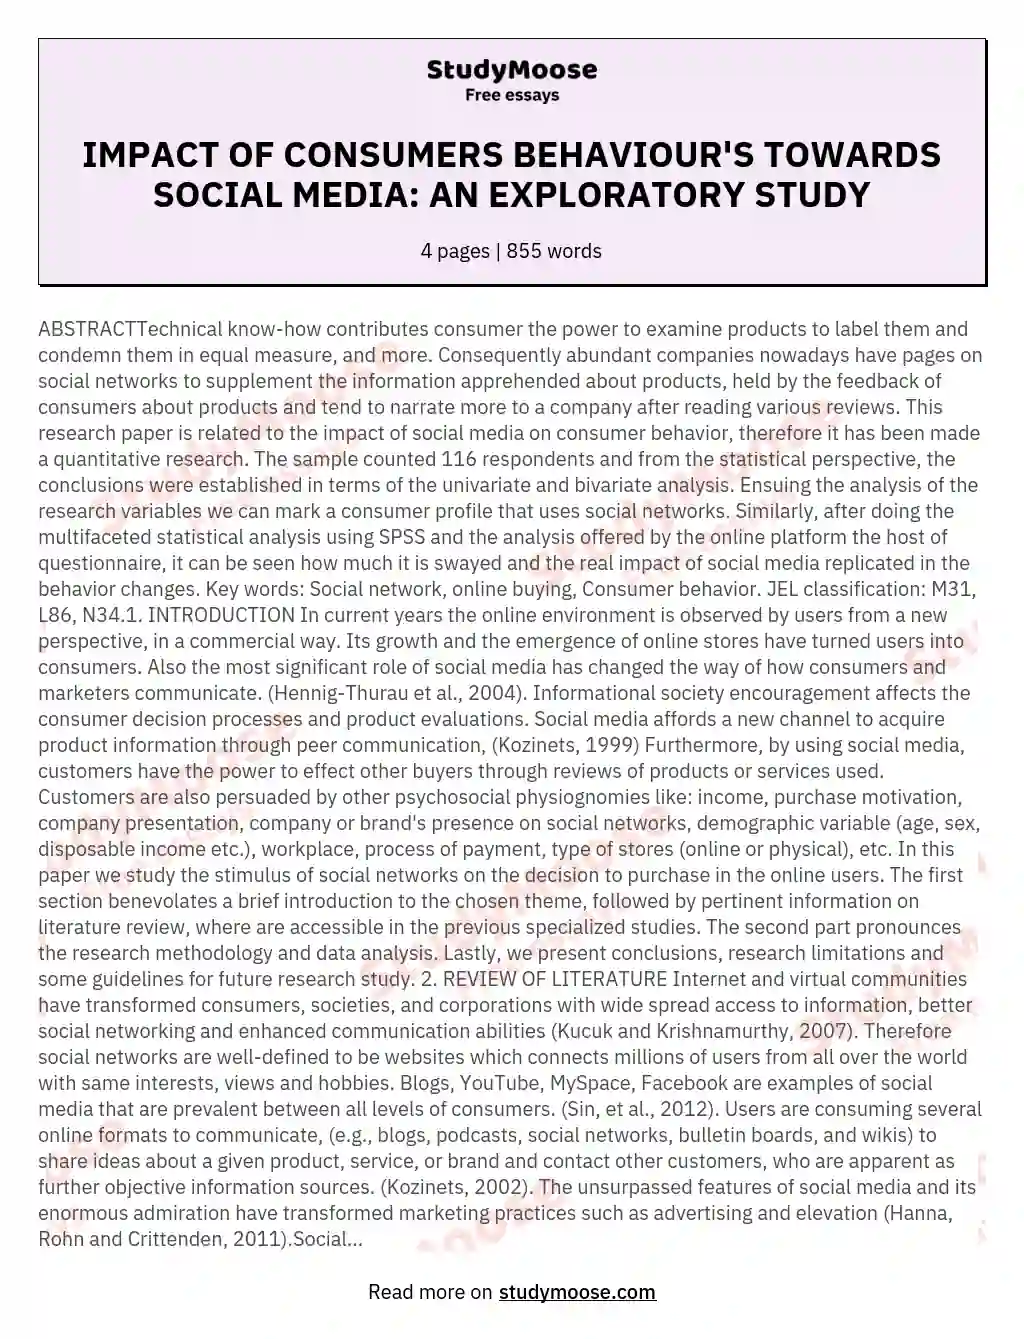 IMPACT OF CONSUMERS BEHAVIOUR'S TOWARDS SOCIAL MEDIA: AN EXPLORATORY STUDY essay